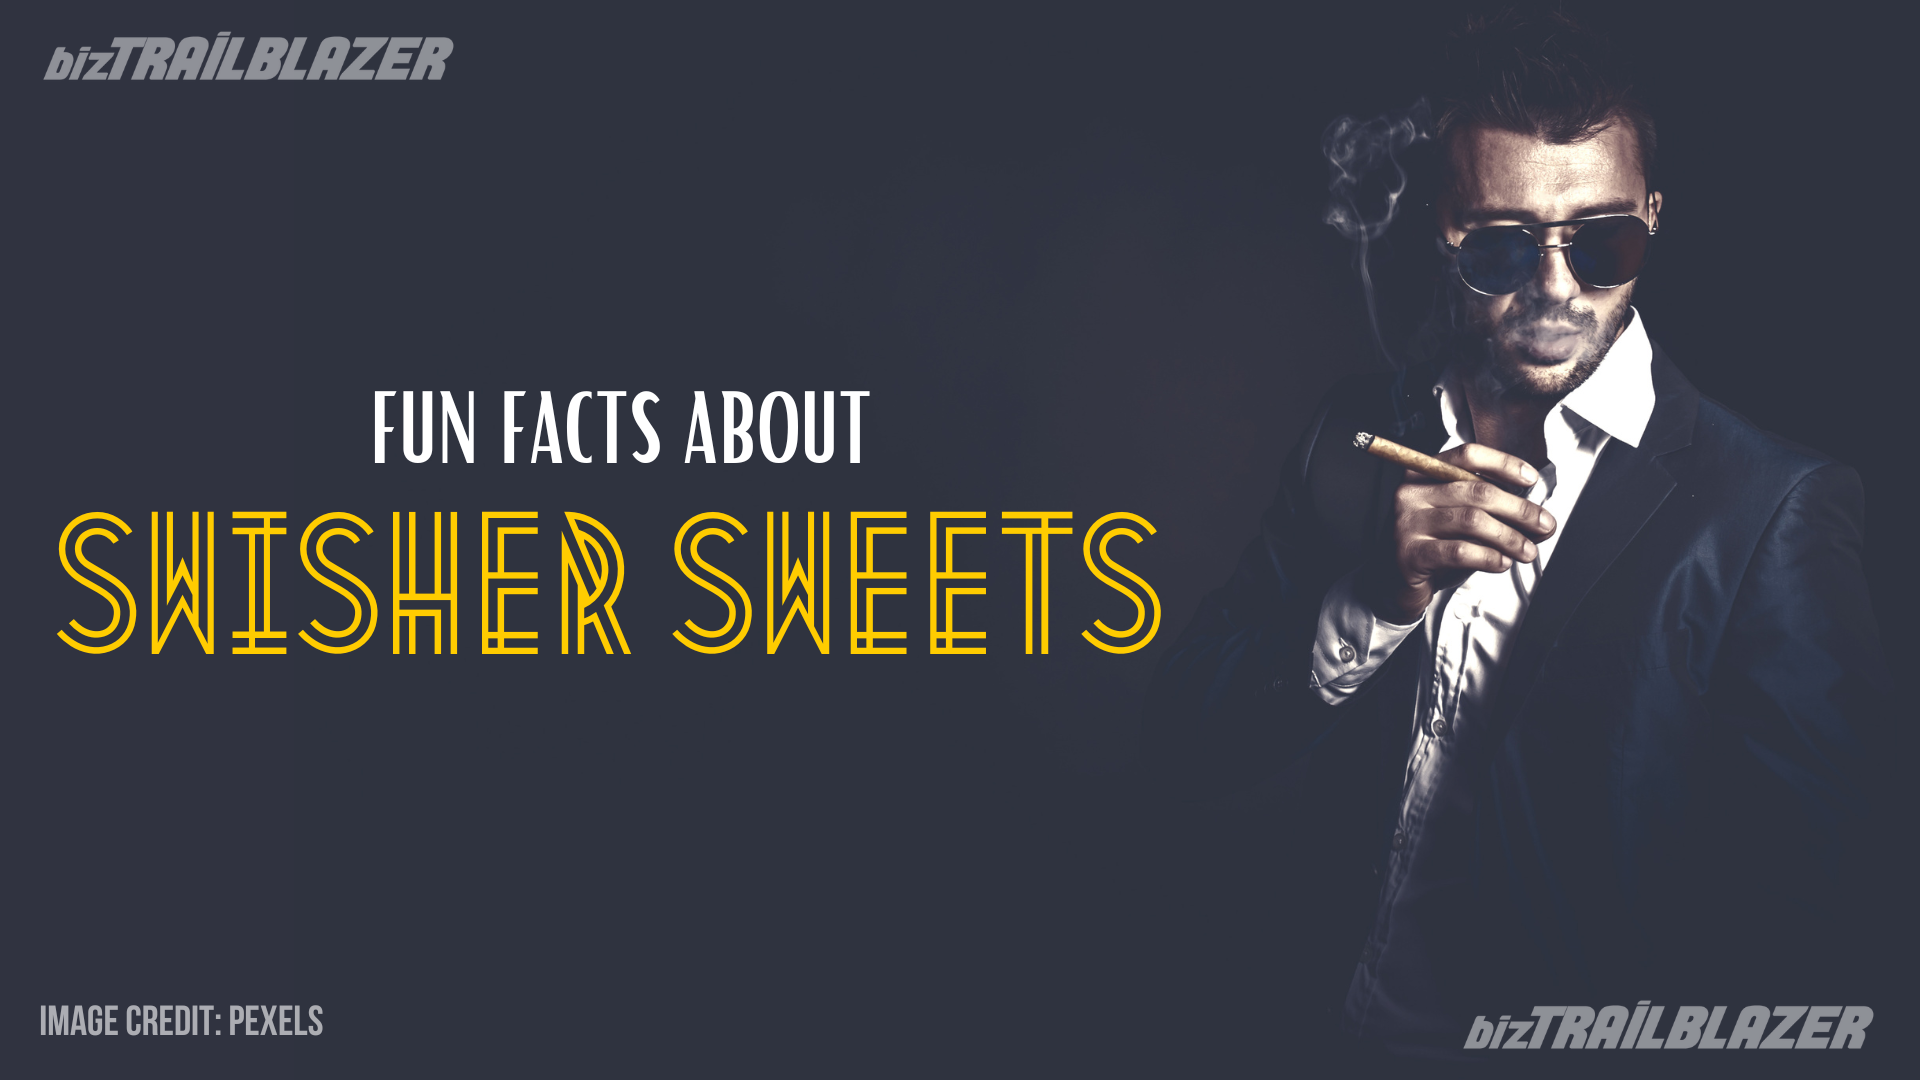 BizTrailblazer - Fun Facts About Swisher Sweets